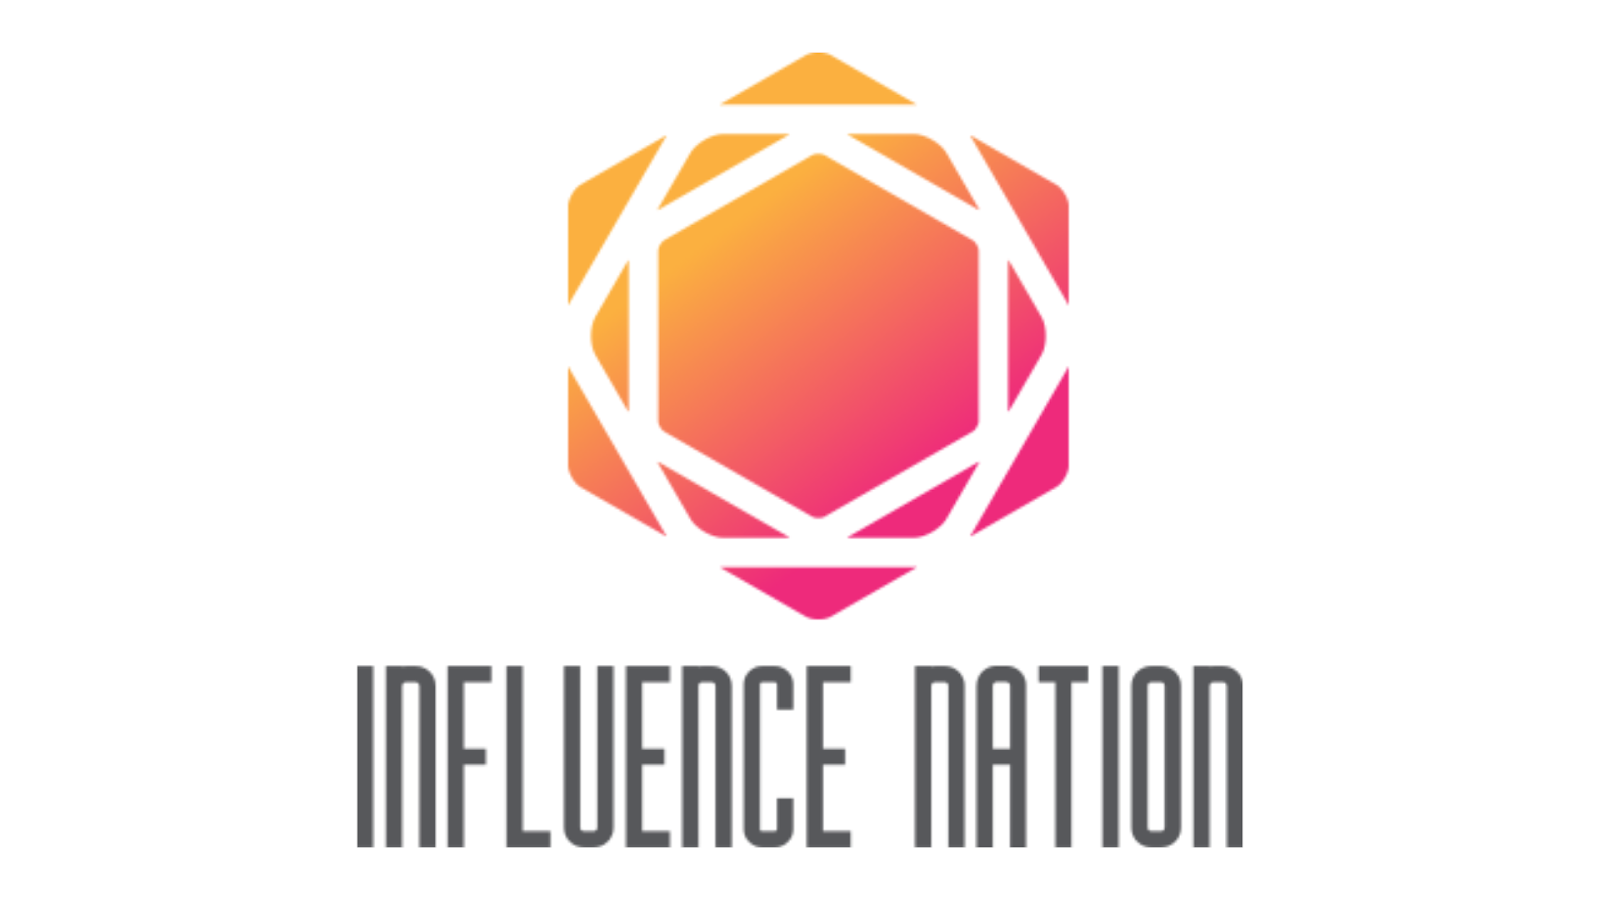 Influence Nation logo